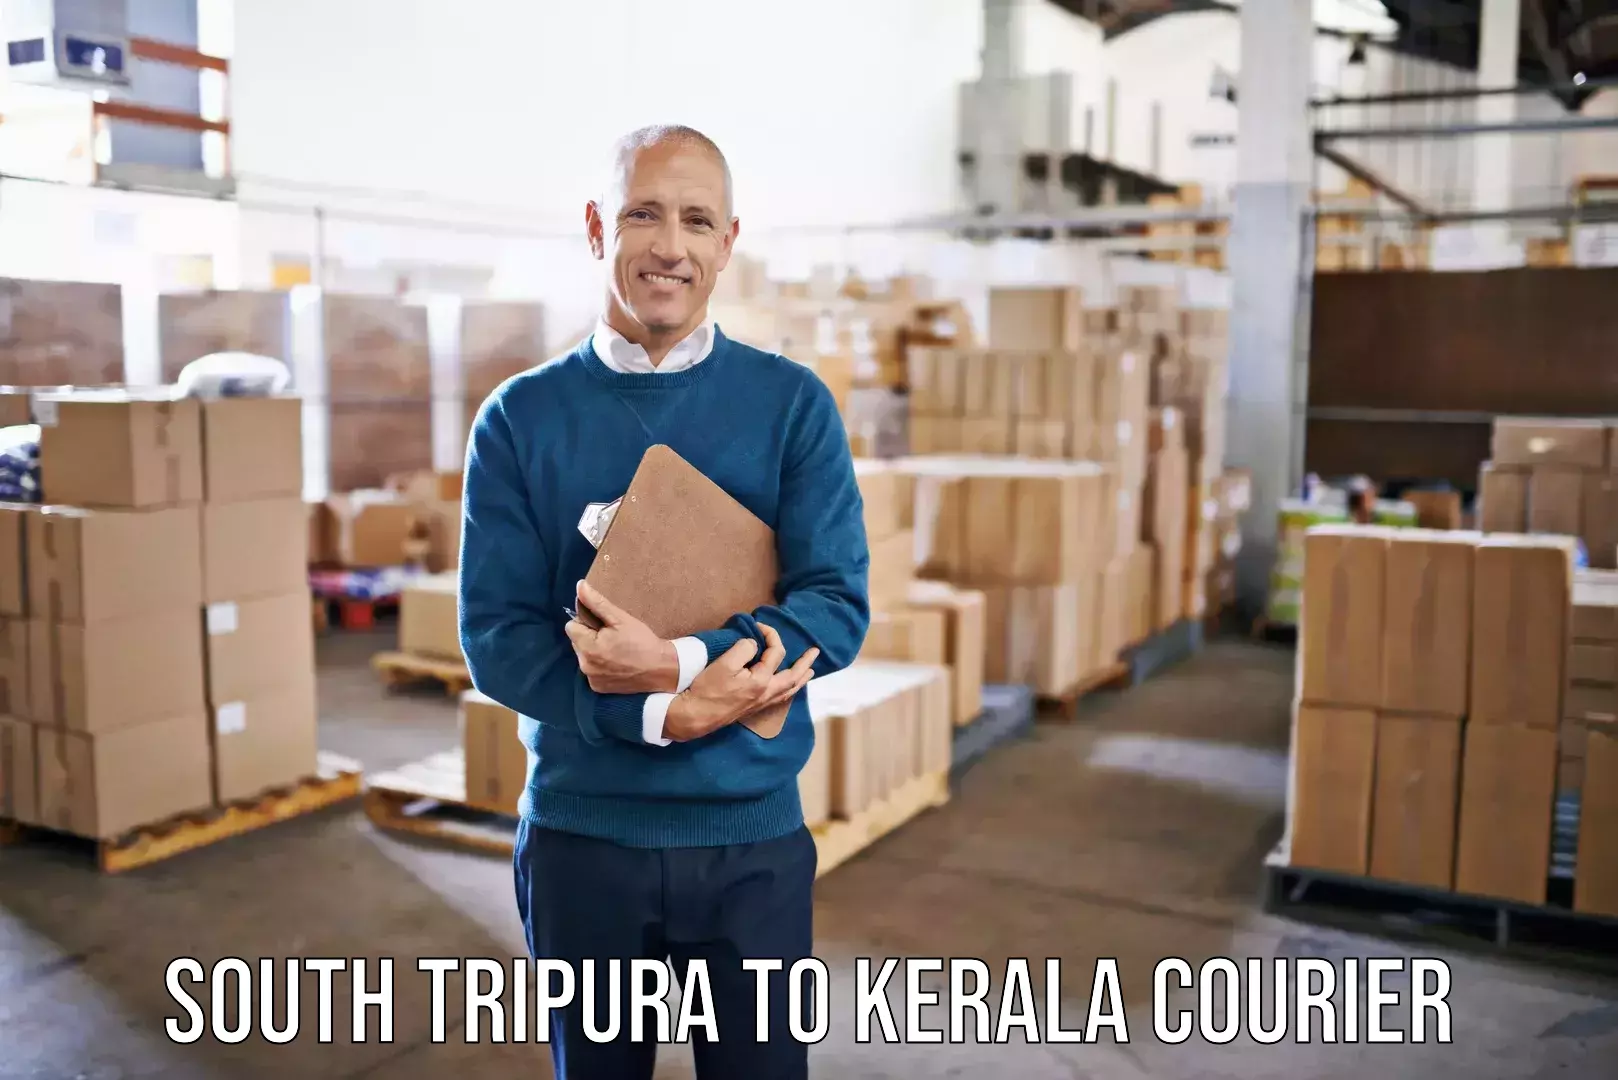 Professional furniture movers South Tripura to Kottayam